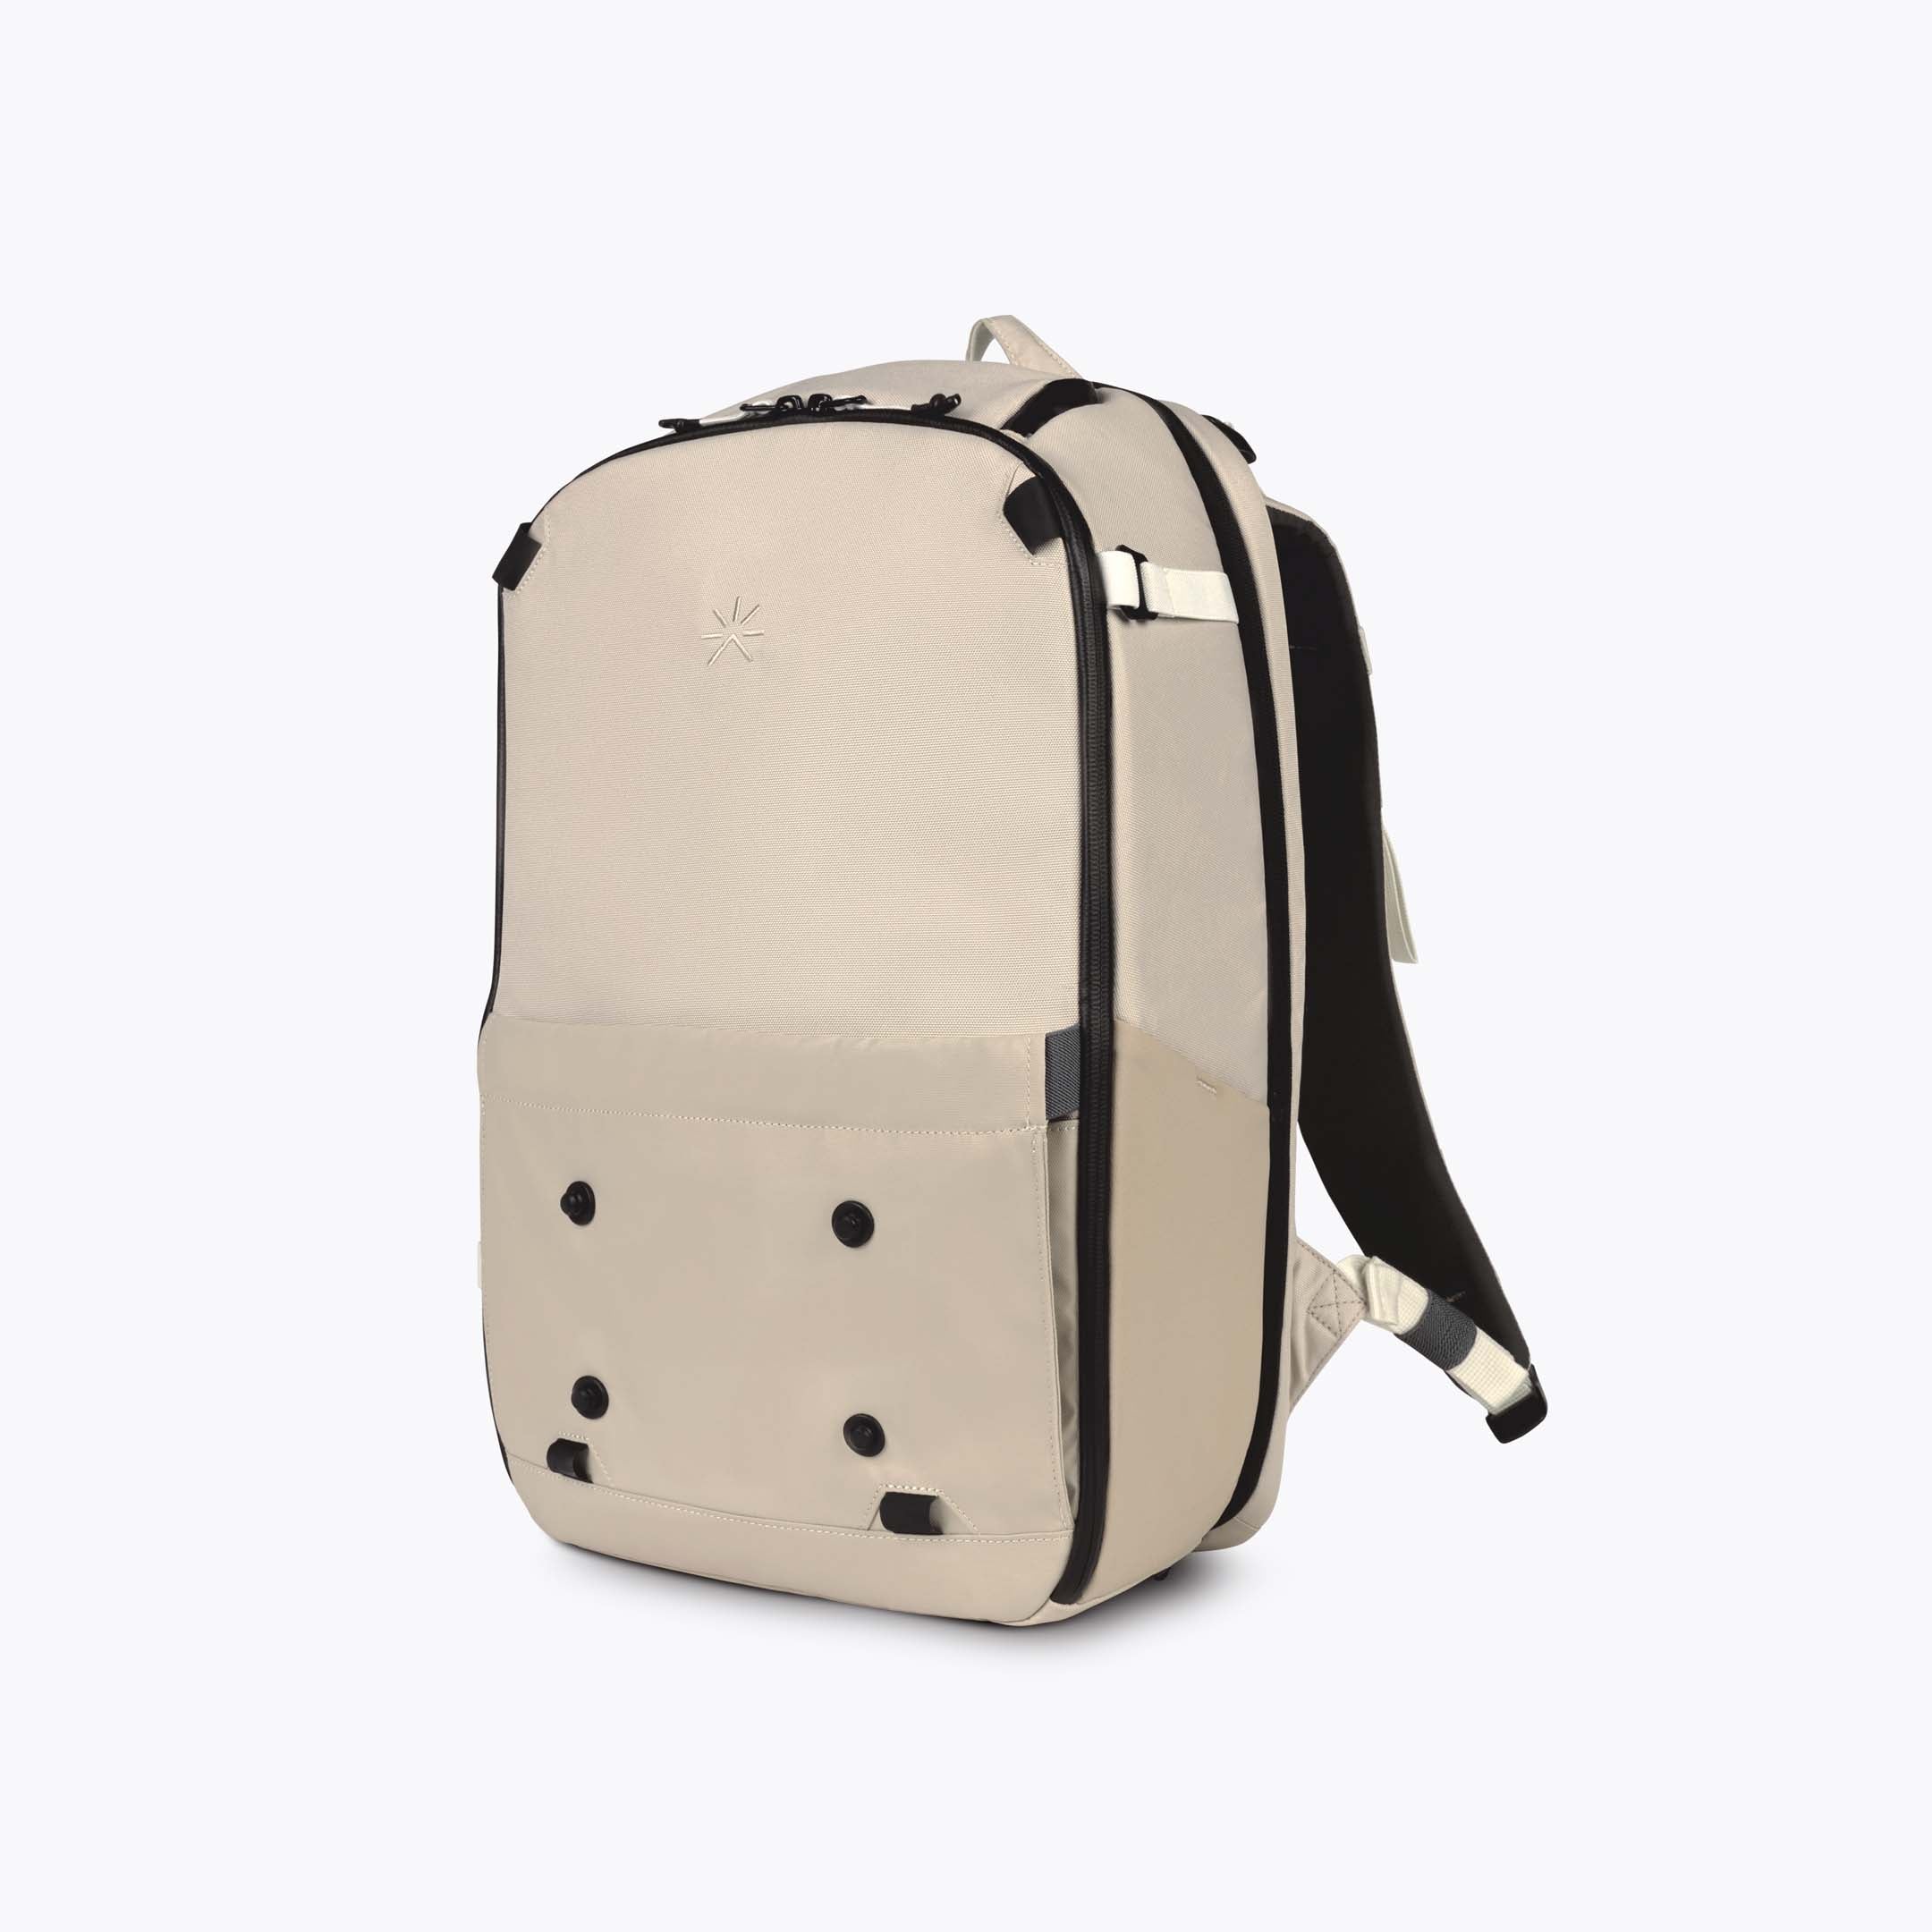 Hive Backpack Walnut Sand + Wardrobe + Smart Packing Cube 12L Walnut Sand + FidLock? Toiletry Walnut Sand + FidLock? Pouch Walnut Sand